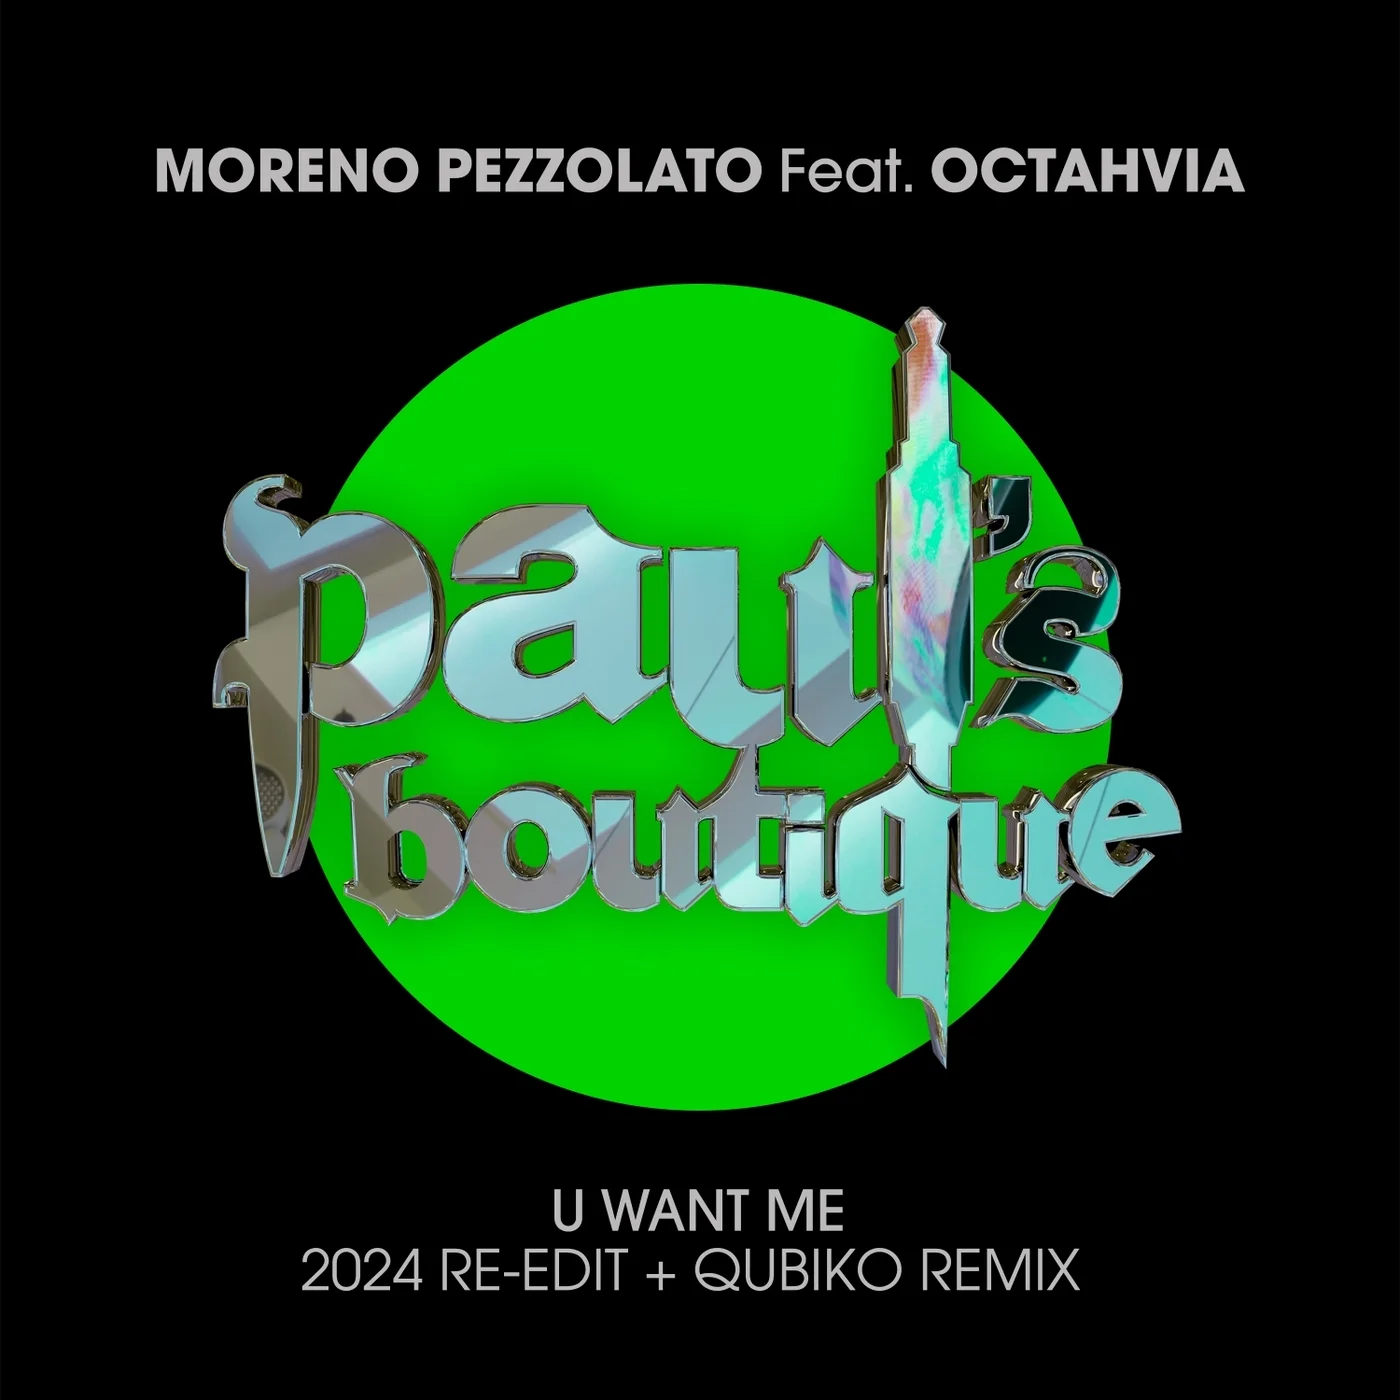 Moreno Pezzolato & Octahvia - U Want Me feat. Octahvia (Qubiko Remix)